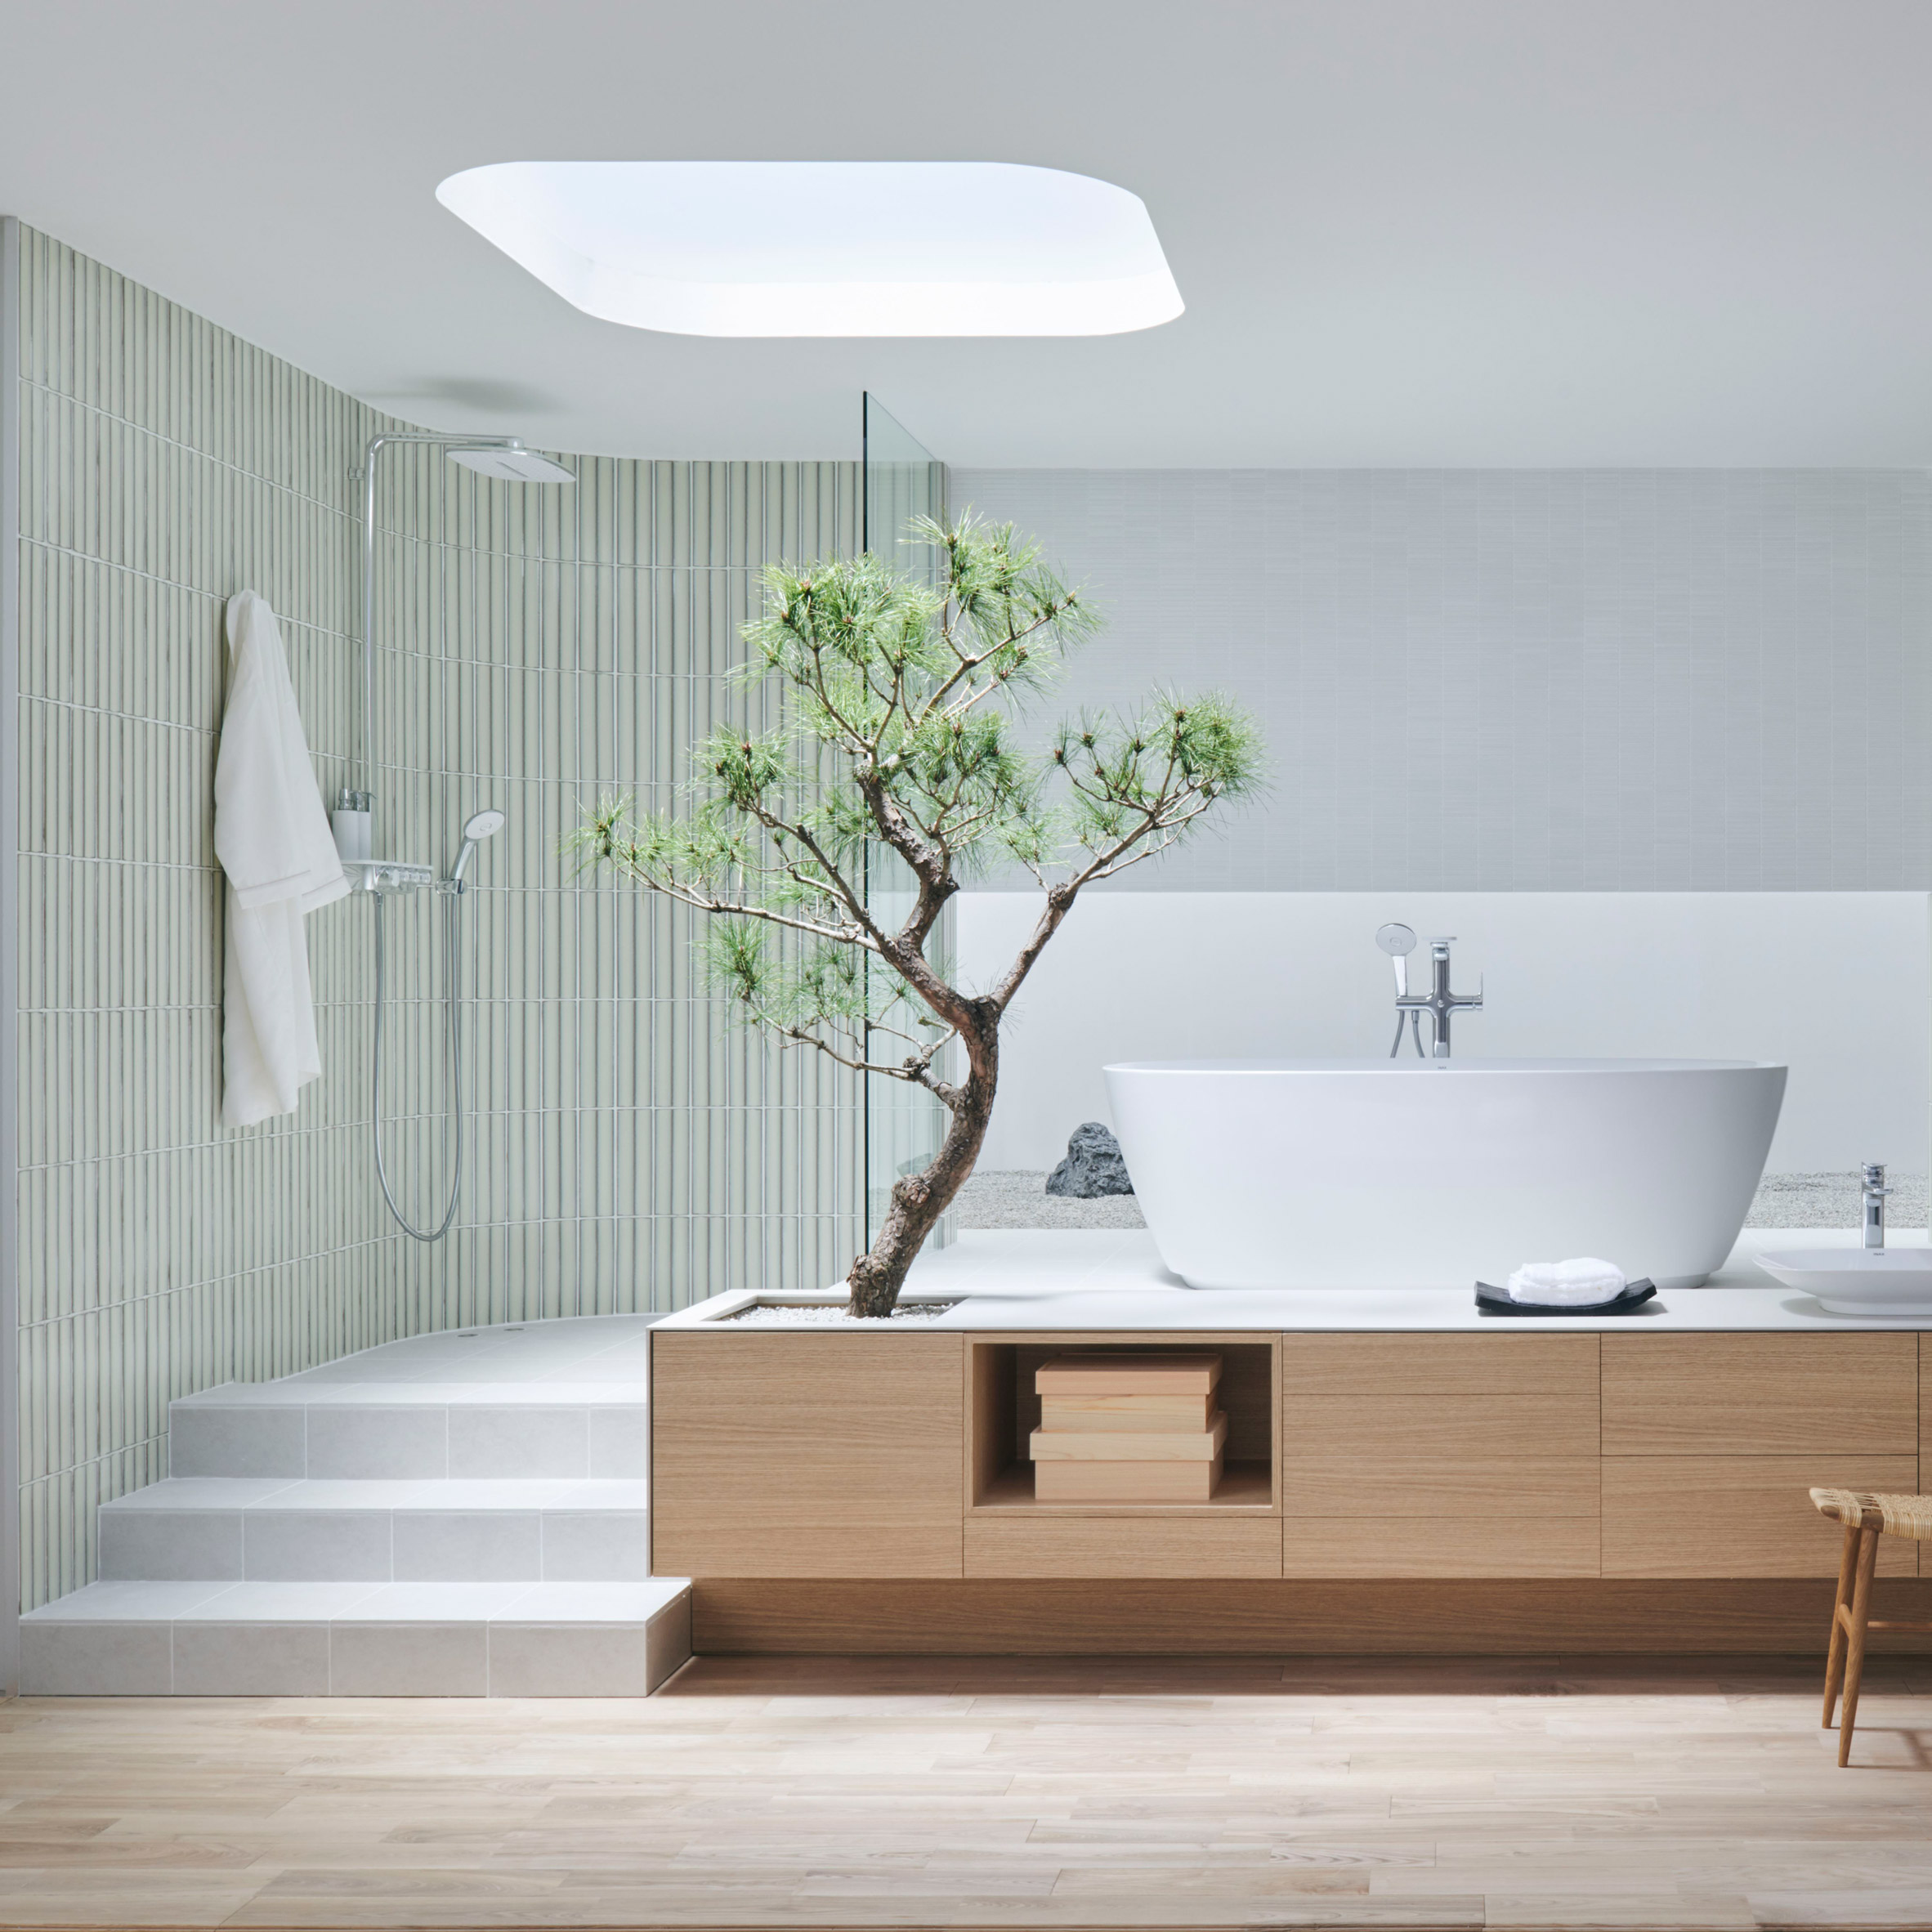 Milan Design Week 2022: bathroom furniture and sanitary ware previews